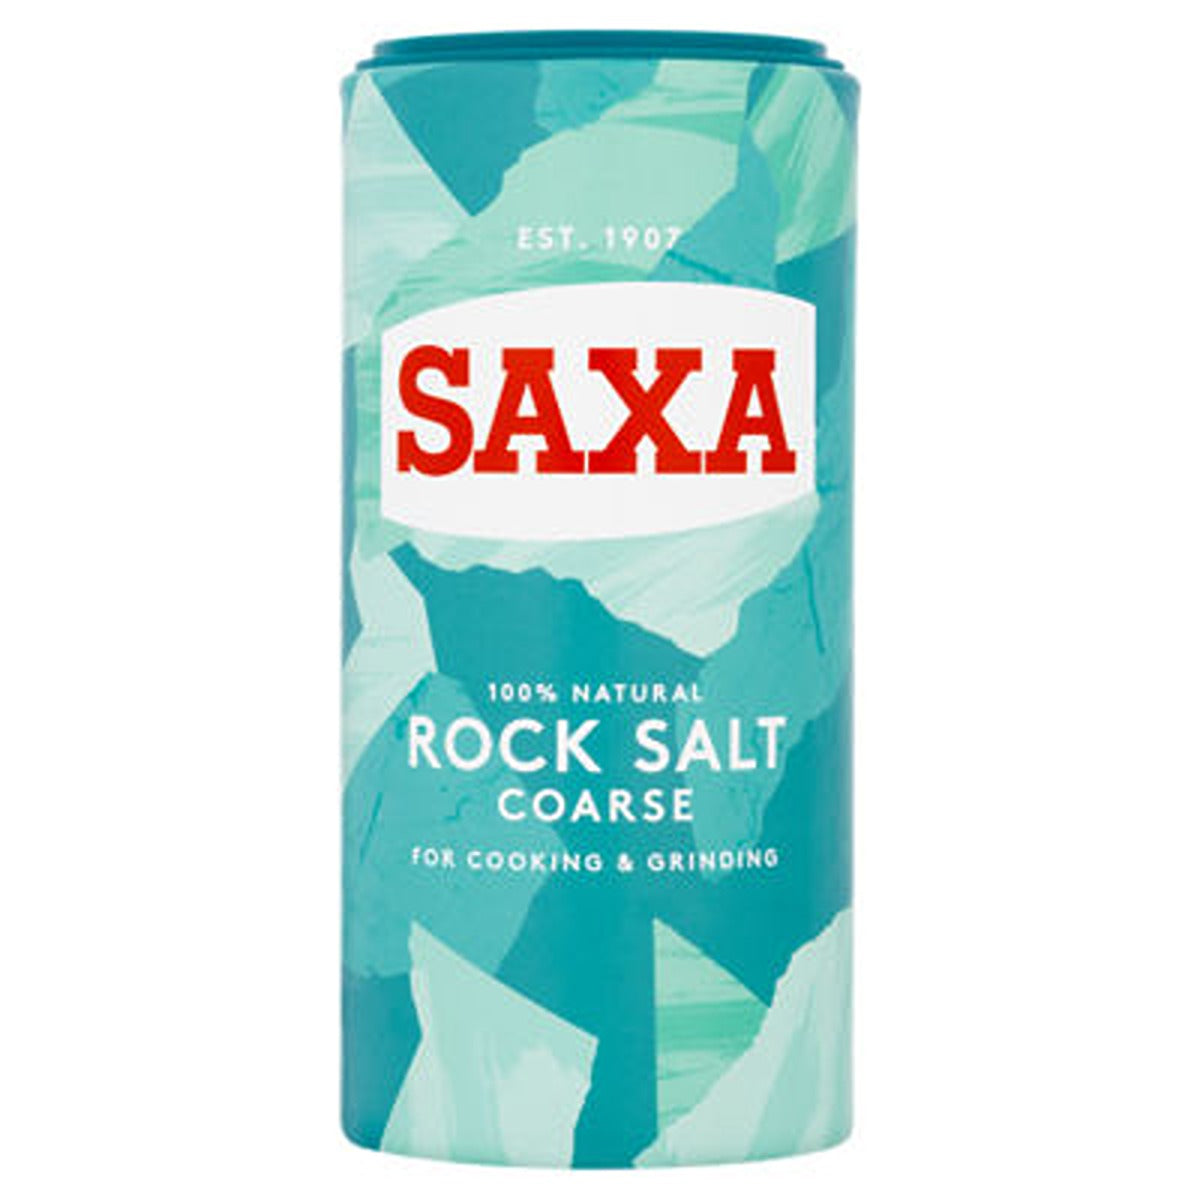 Saxa - Rock Salt - 350g - Continental Food Store